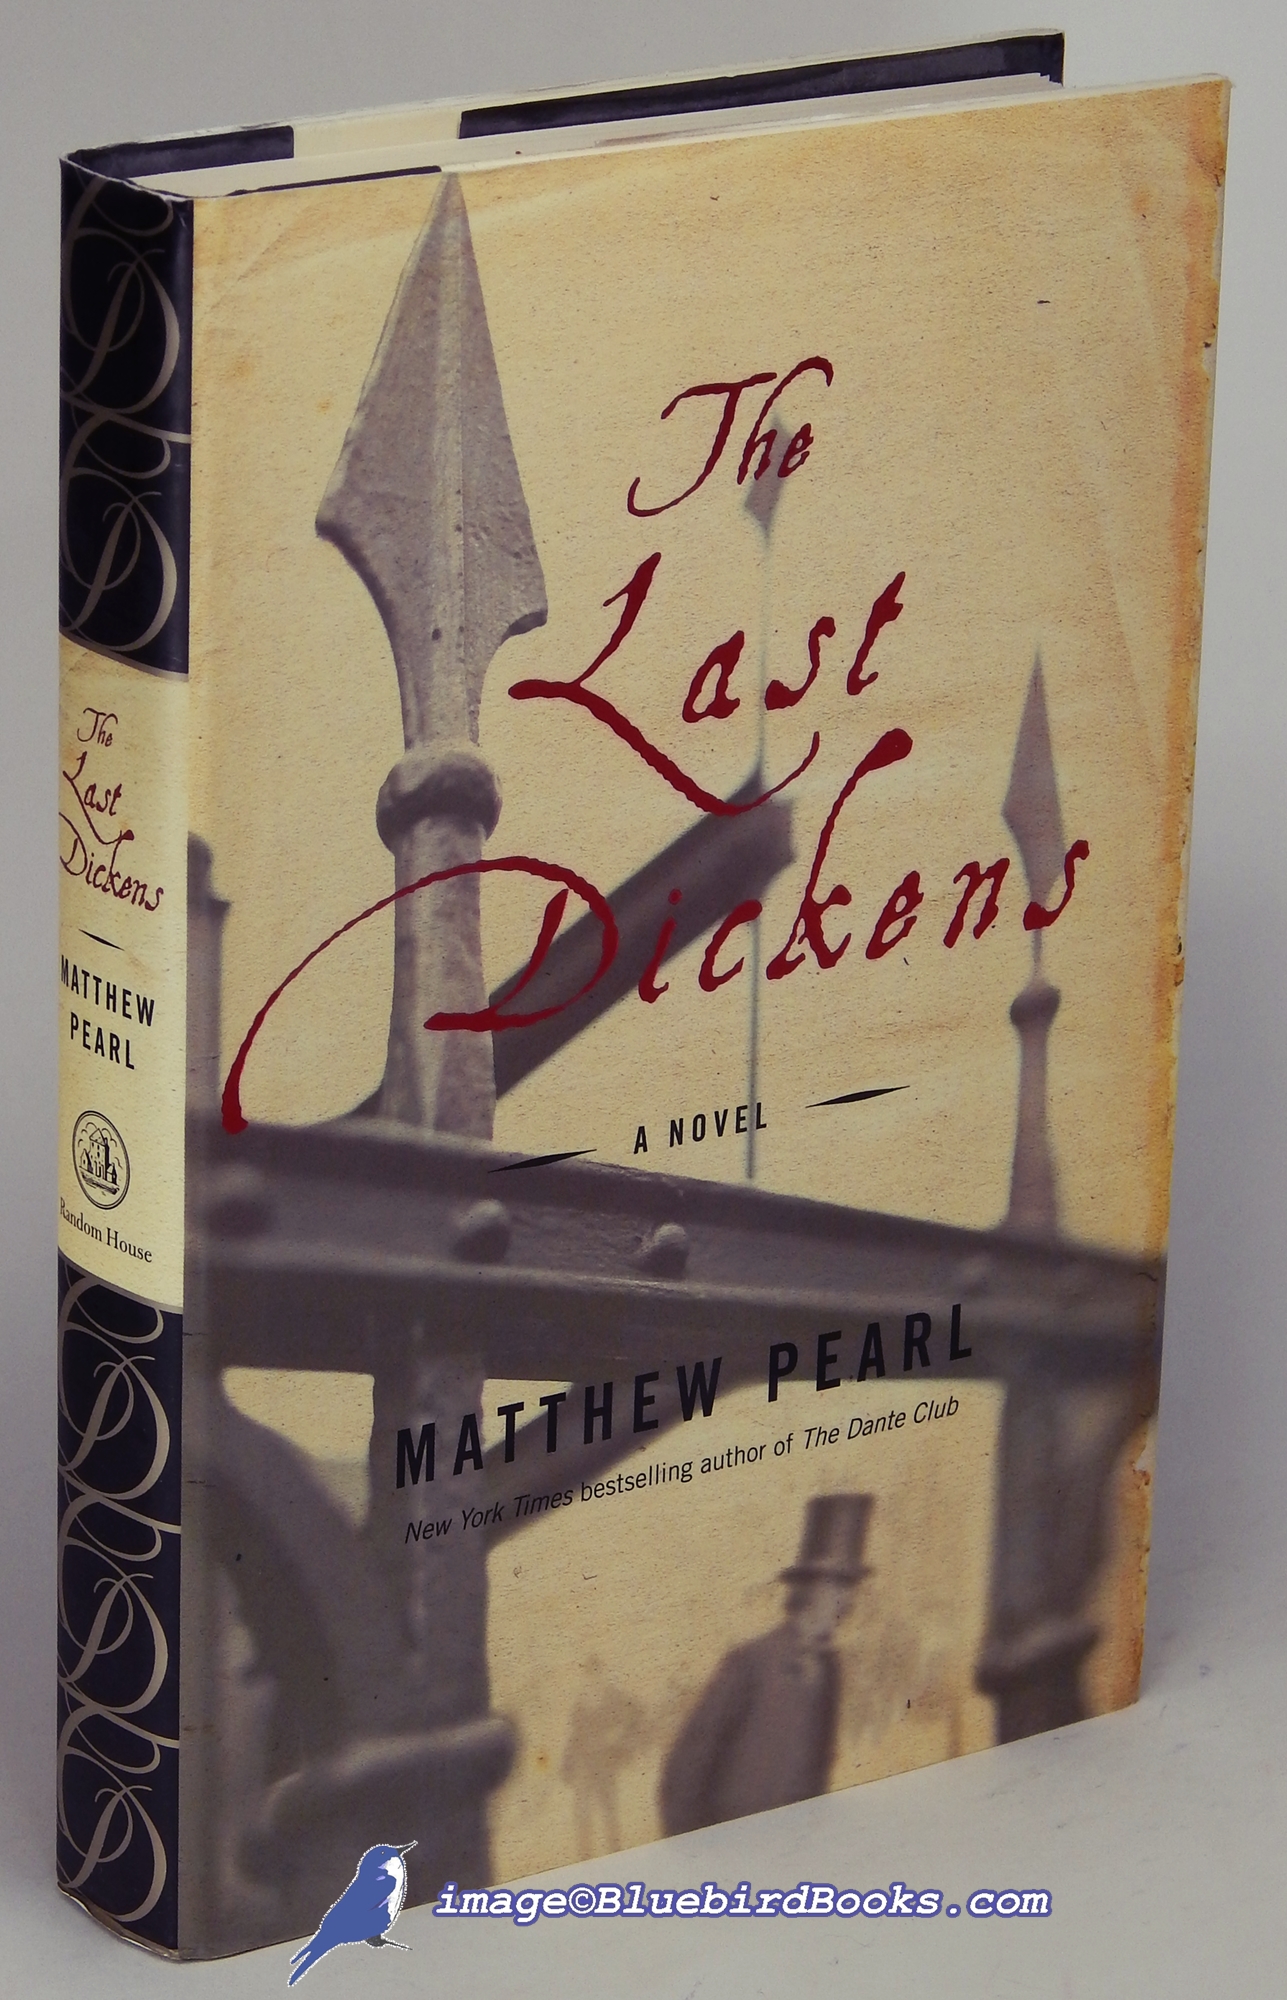 PEARL, MATTHEW - The Last Dickens: A Novel